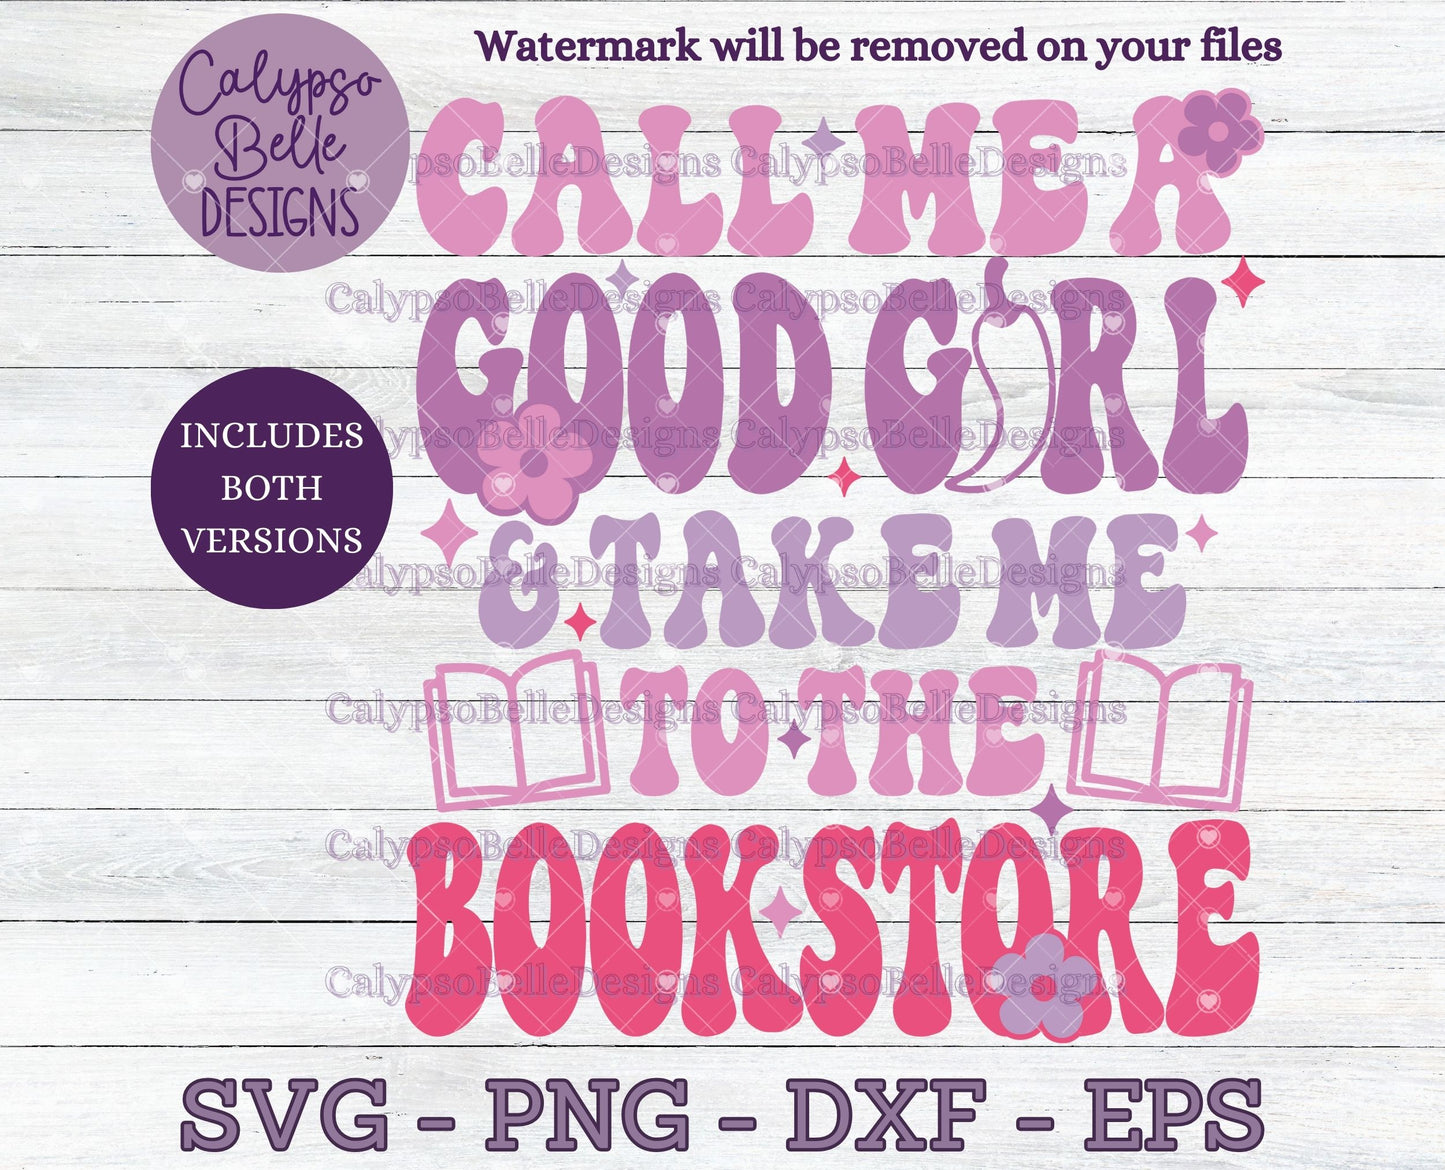 Call me a good girl & take me to the bookstore, Retro Bookish Design